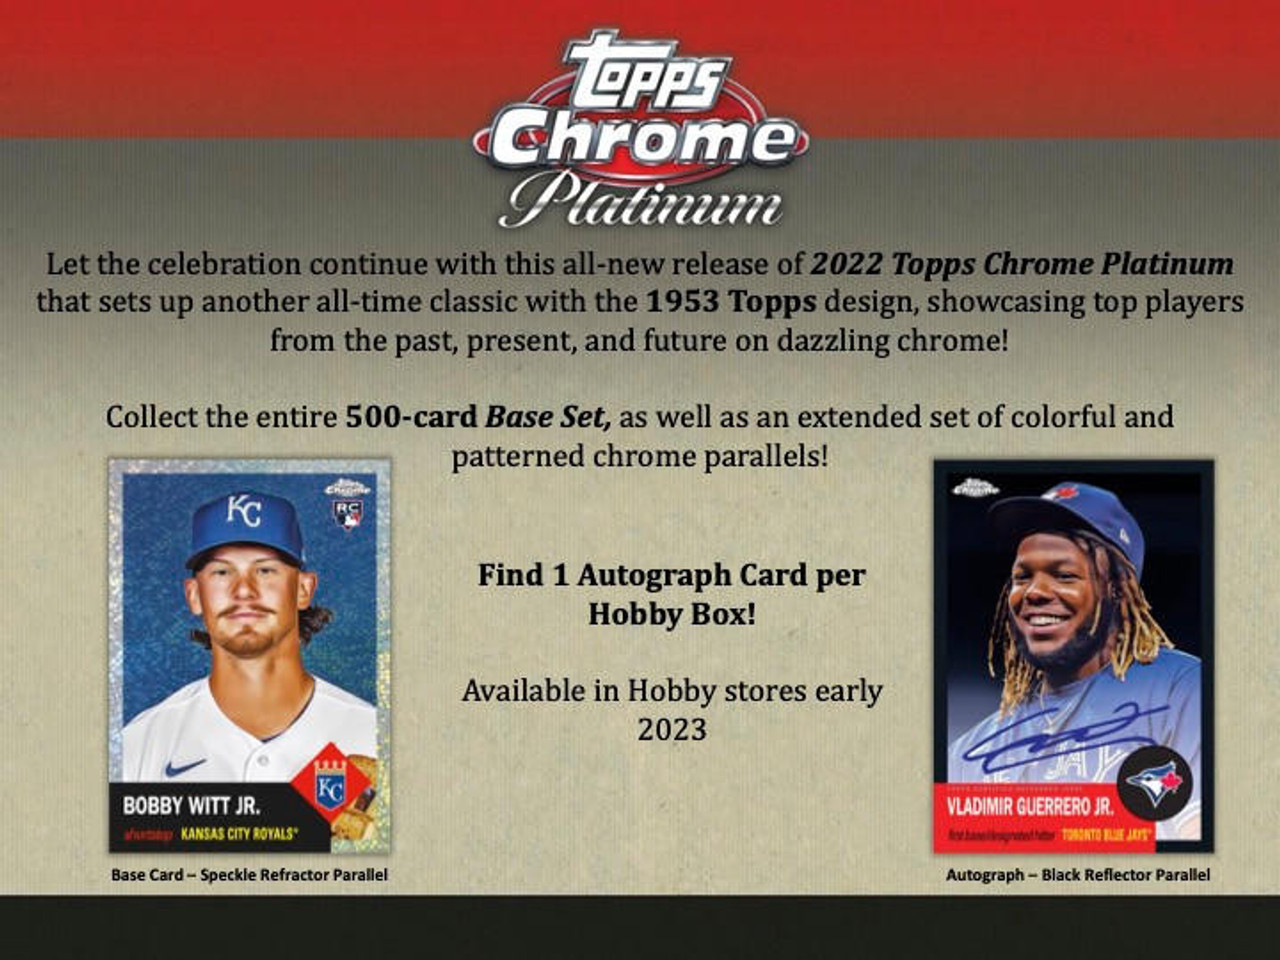 2005 Topps Gold Bobby Abreu Baseball Card Serial Numbered ed 